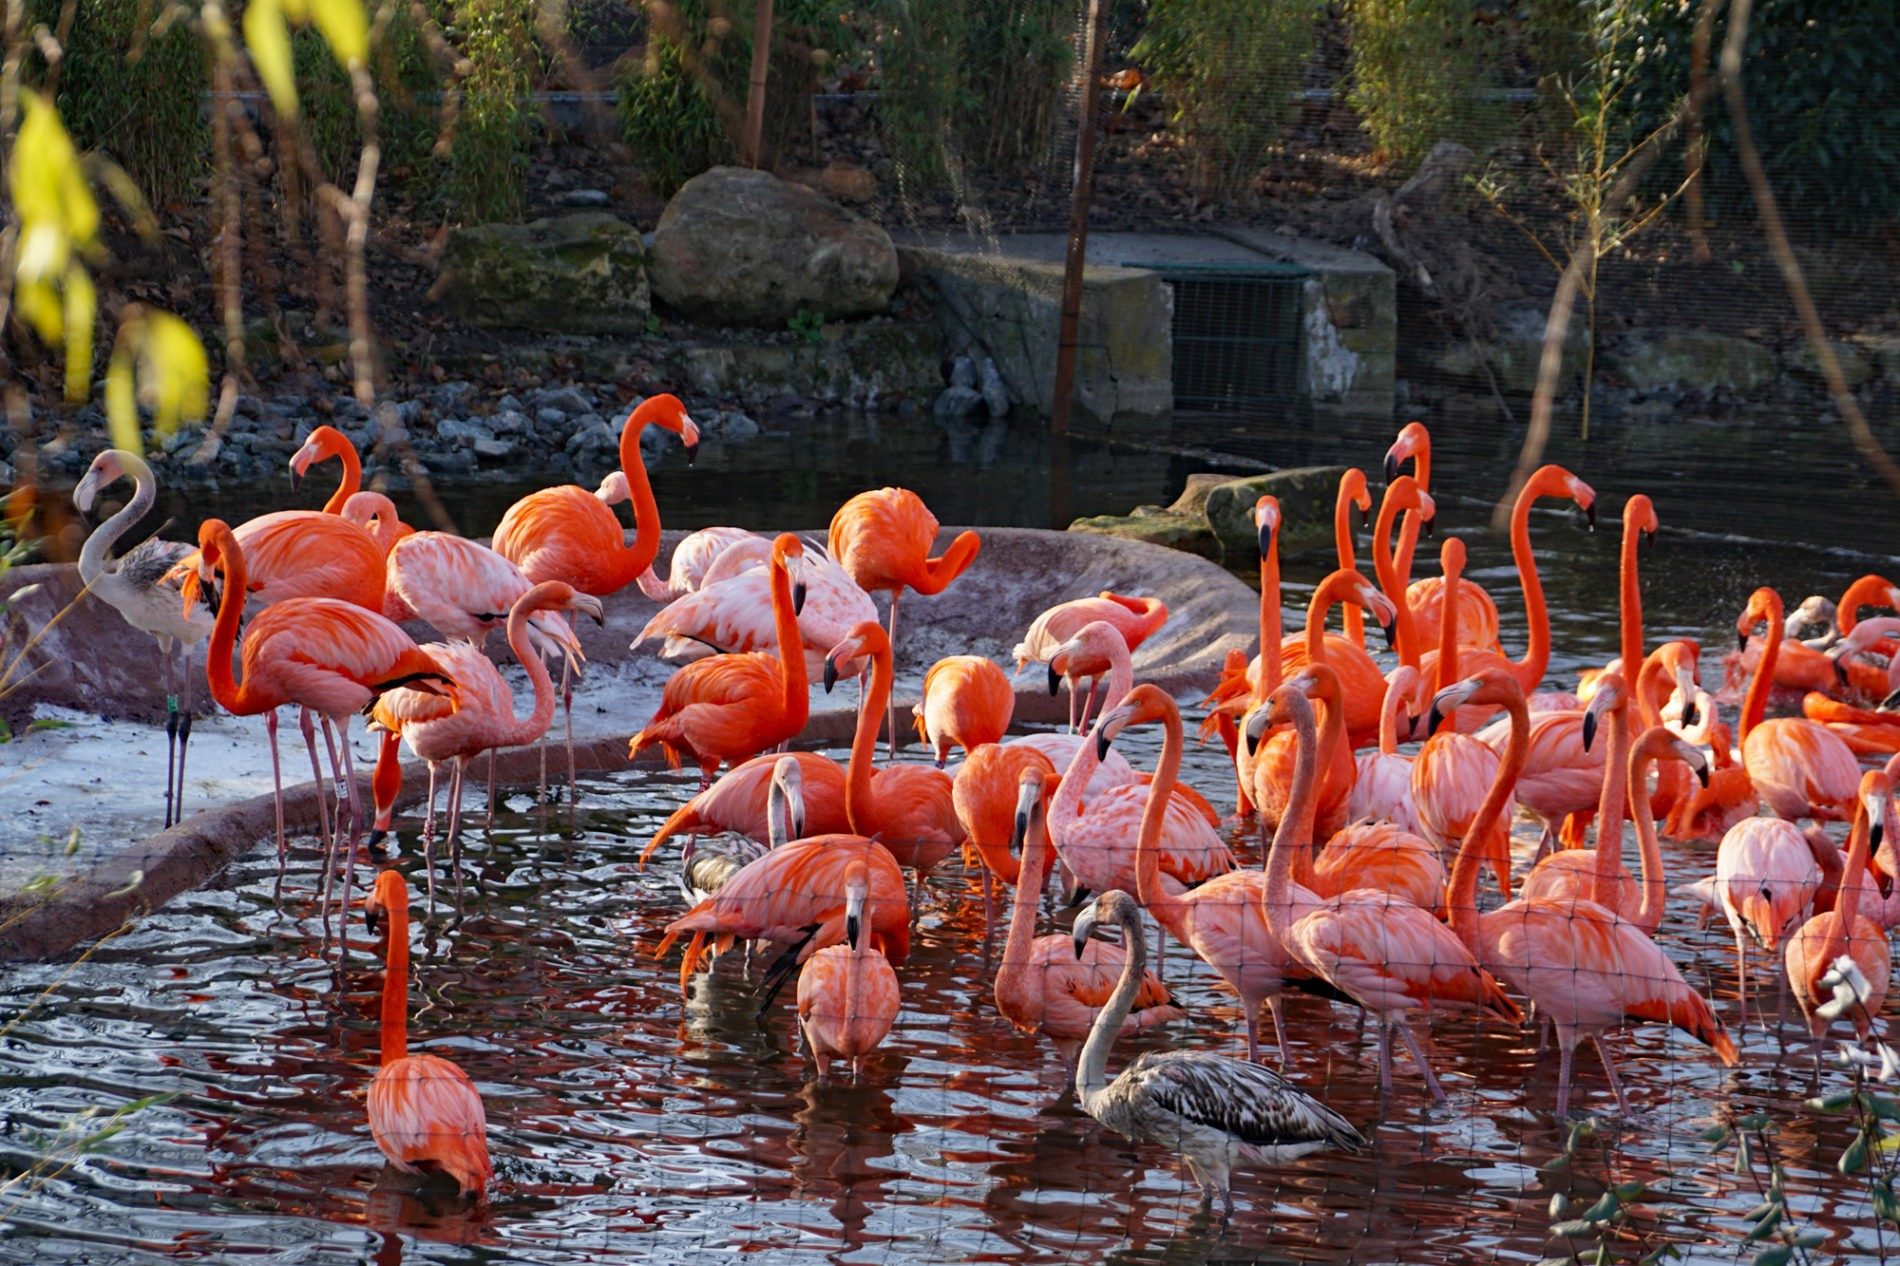 Flamingos in the new outdoor enclosure